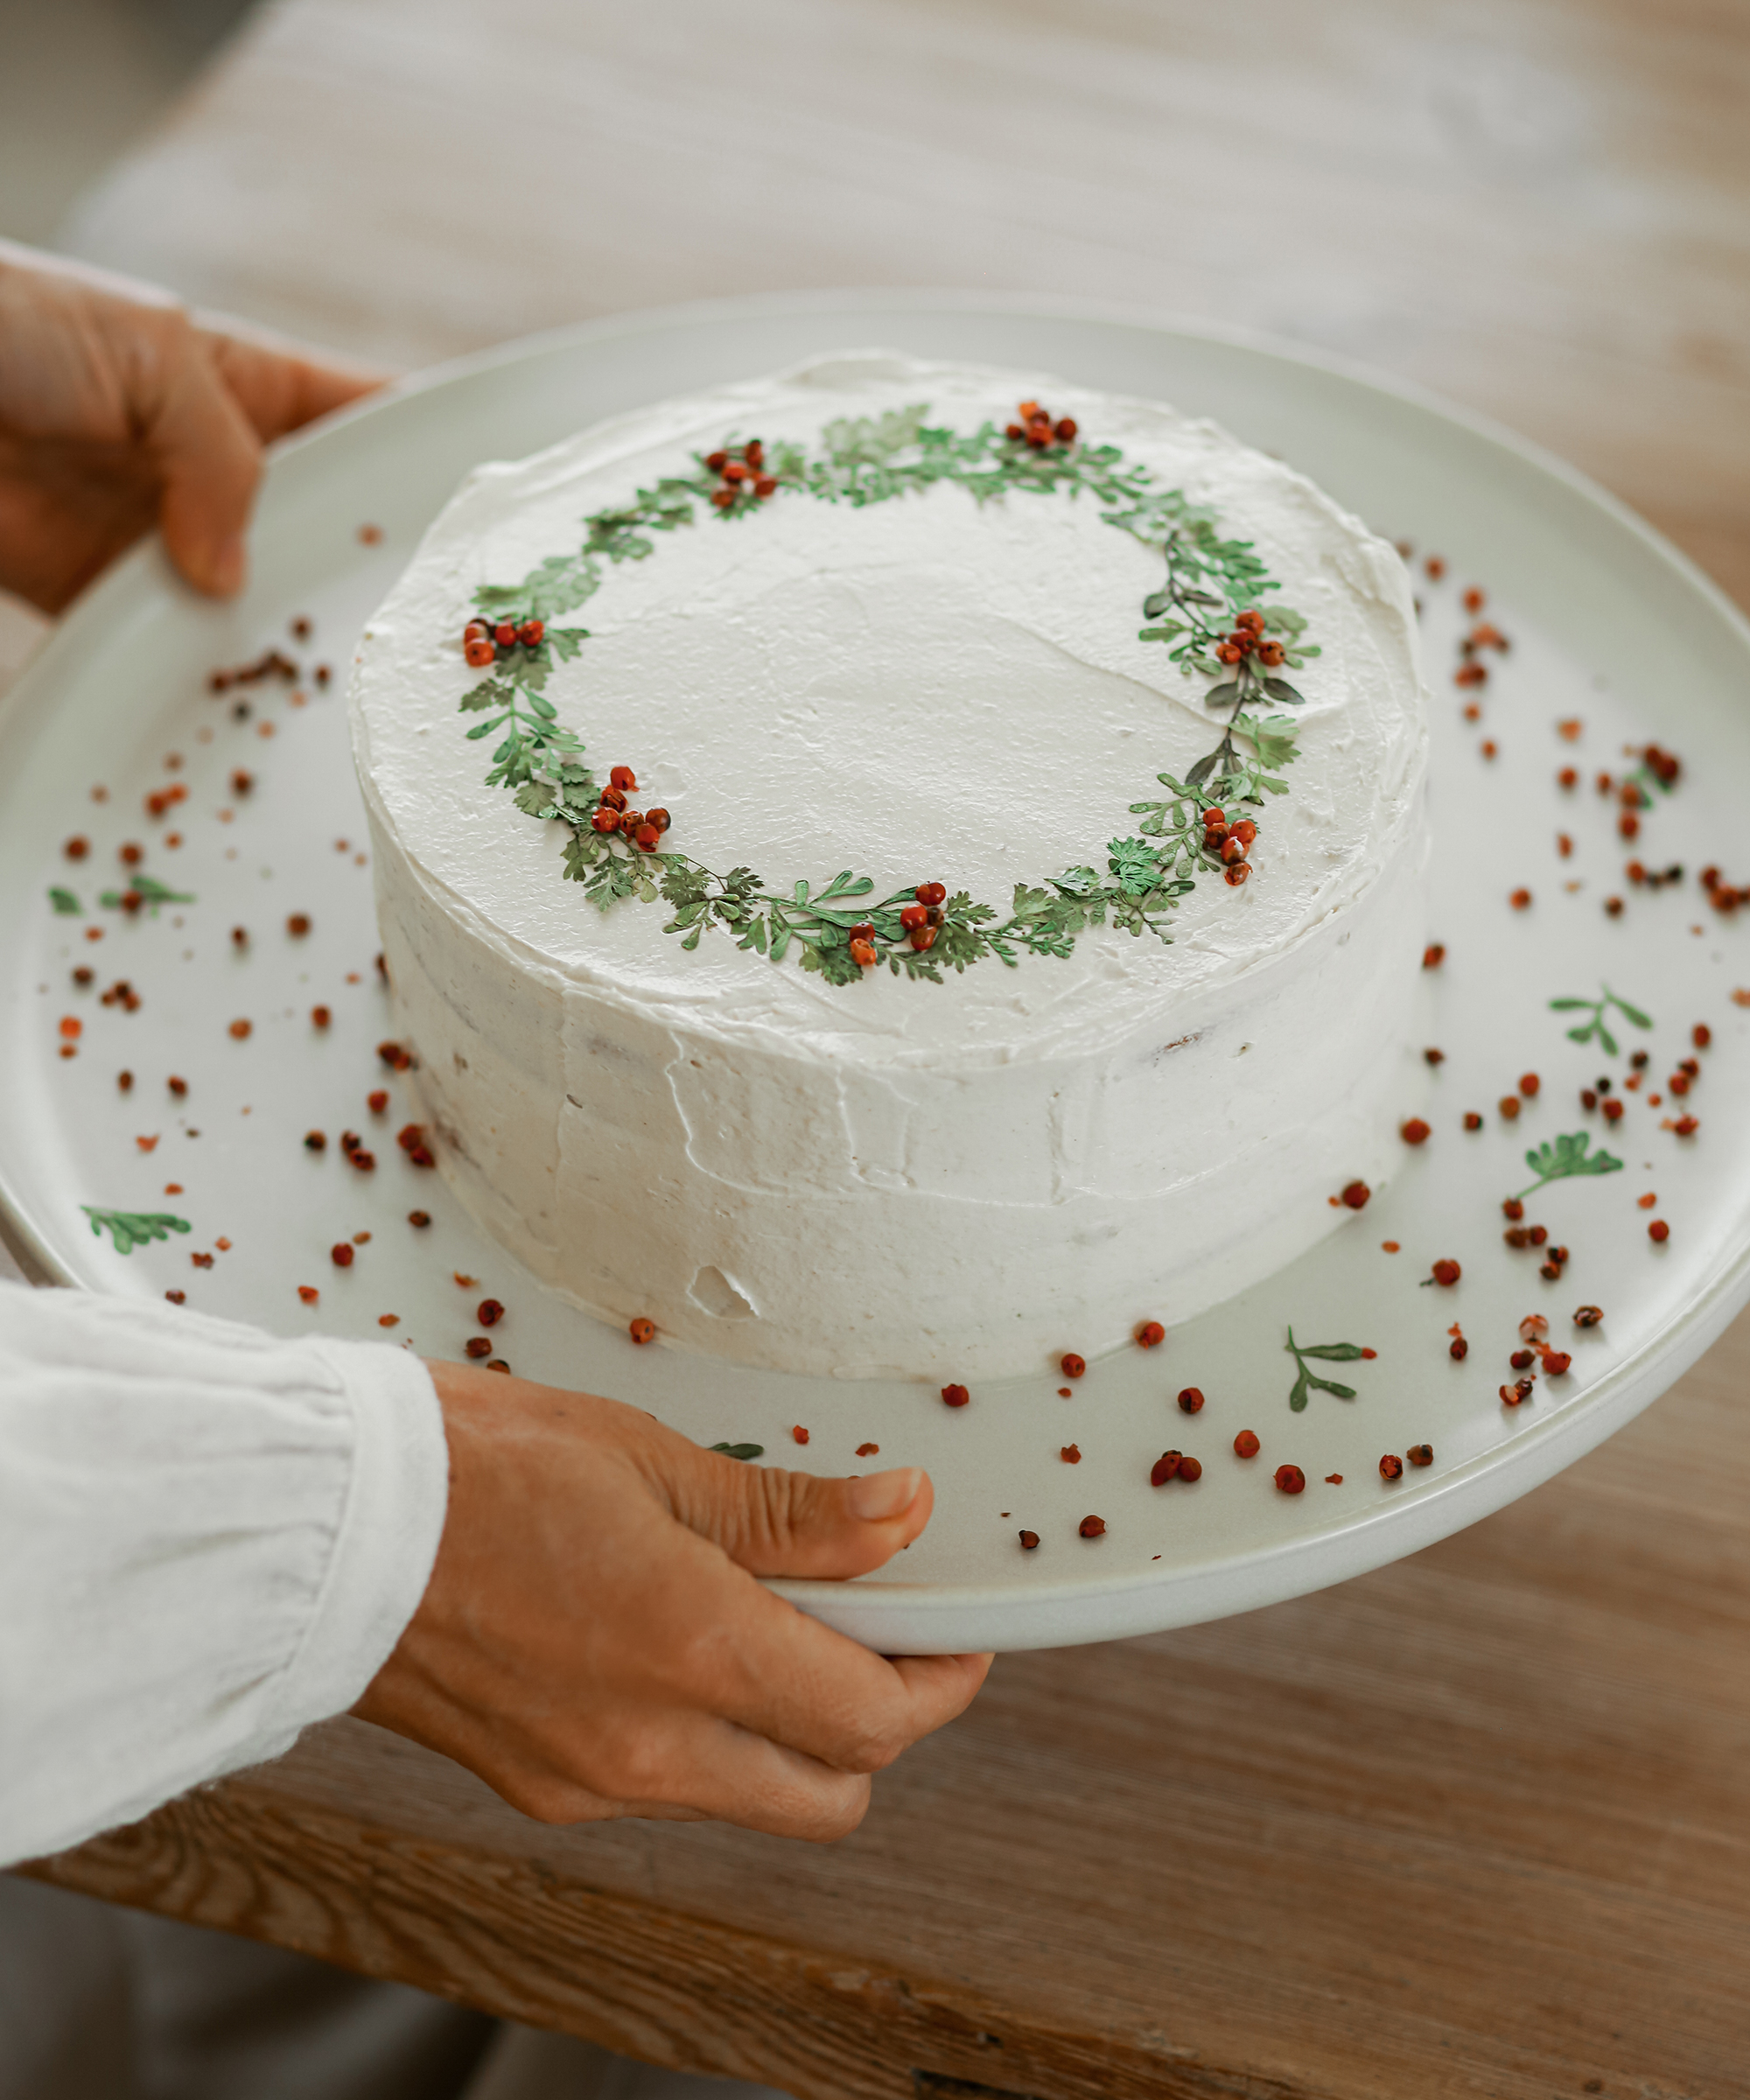 Awesome Homemade Cake & Dessert Ideas For Christmas 🎄🎁 Cutest Cake Recipe  Ever for Holiday - YouTube